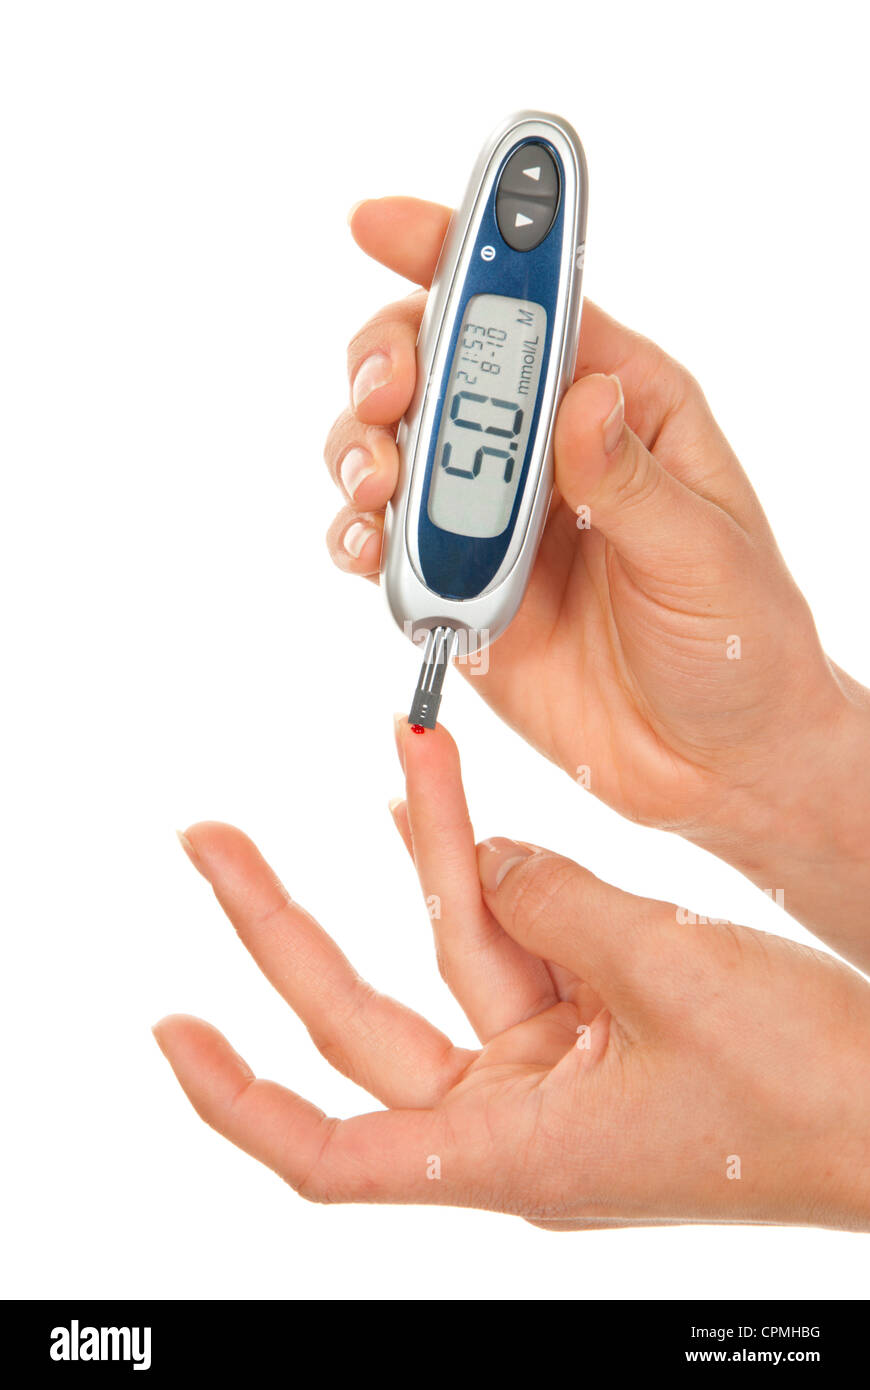 Diabetes-Patienten messen Glukose Niveau Bluttest Stockfoto